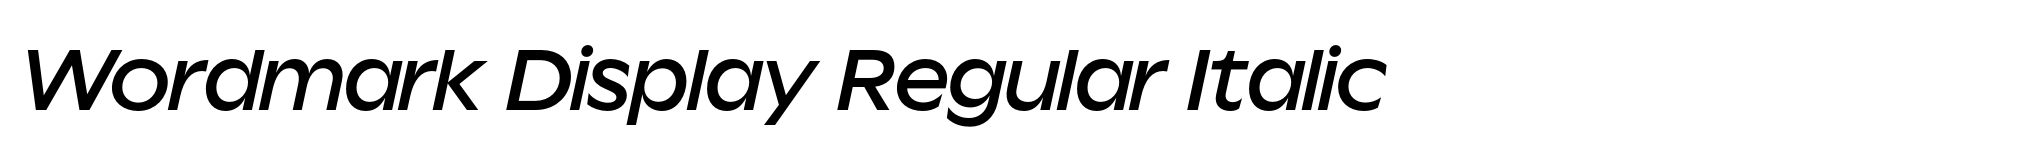 Wordmark Display Regular Italic image